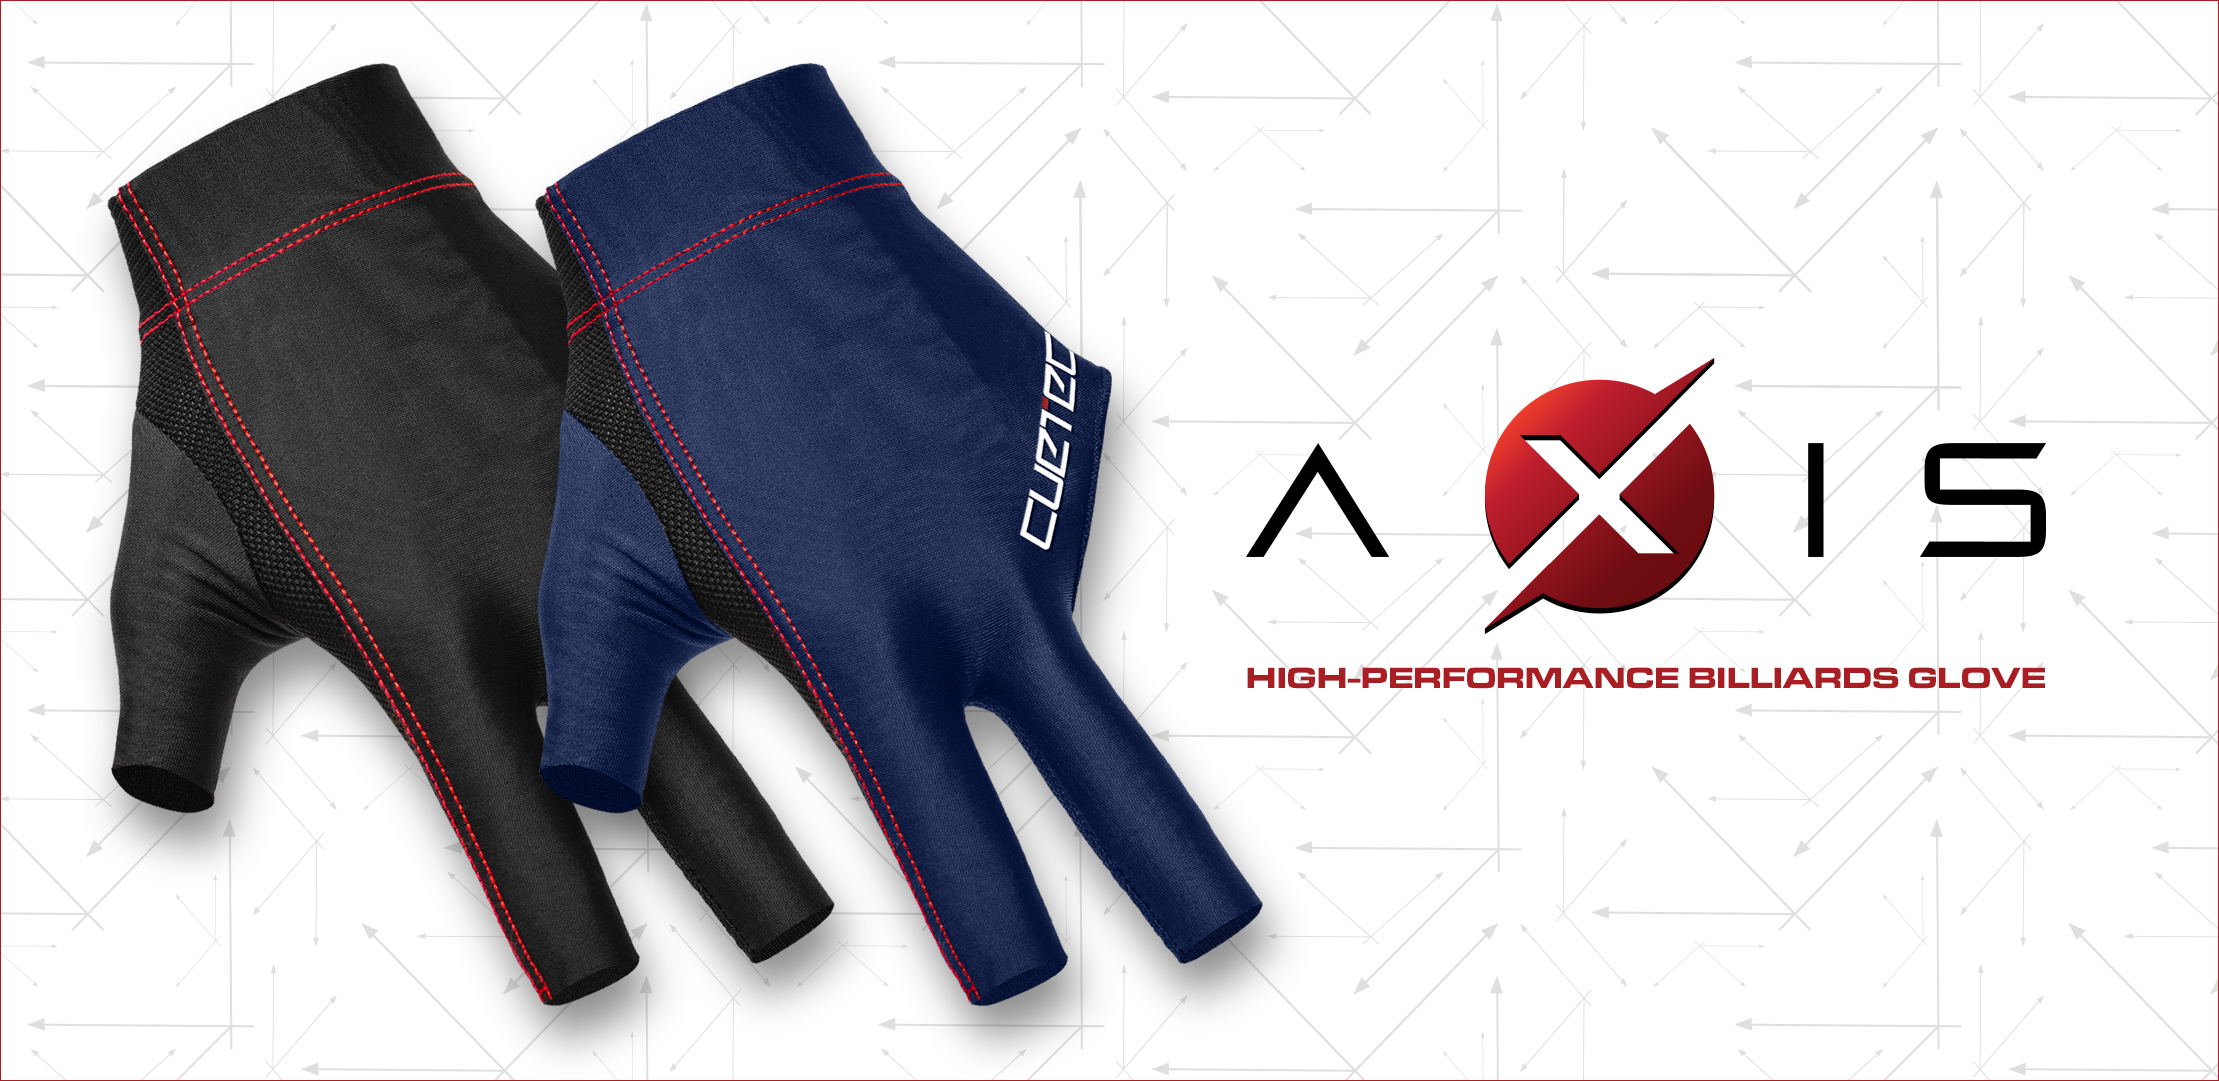 AXIS High-Performance Billiard Gloves